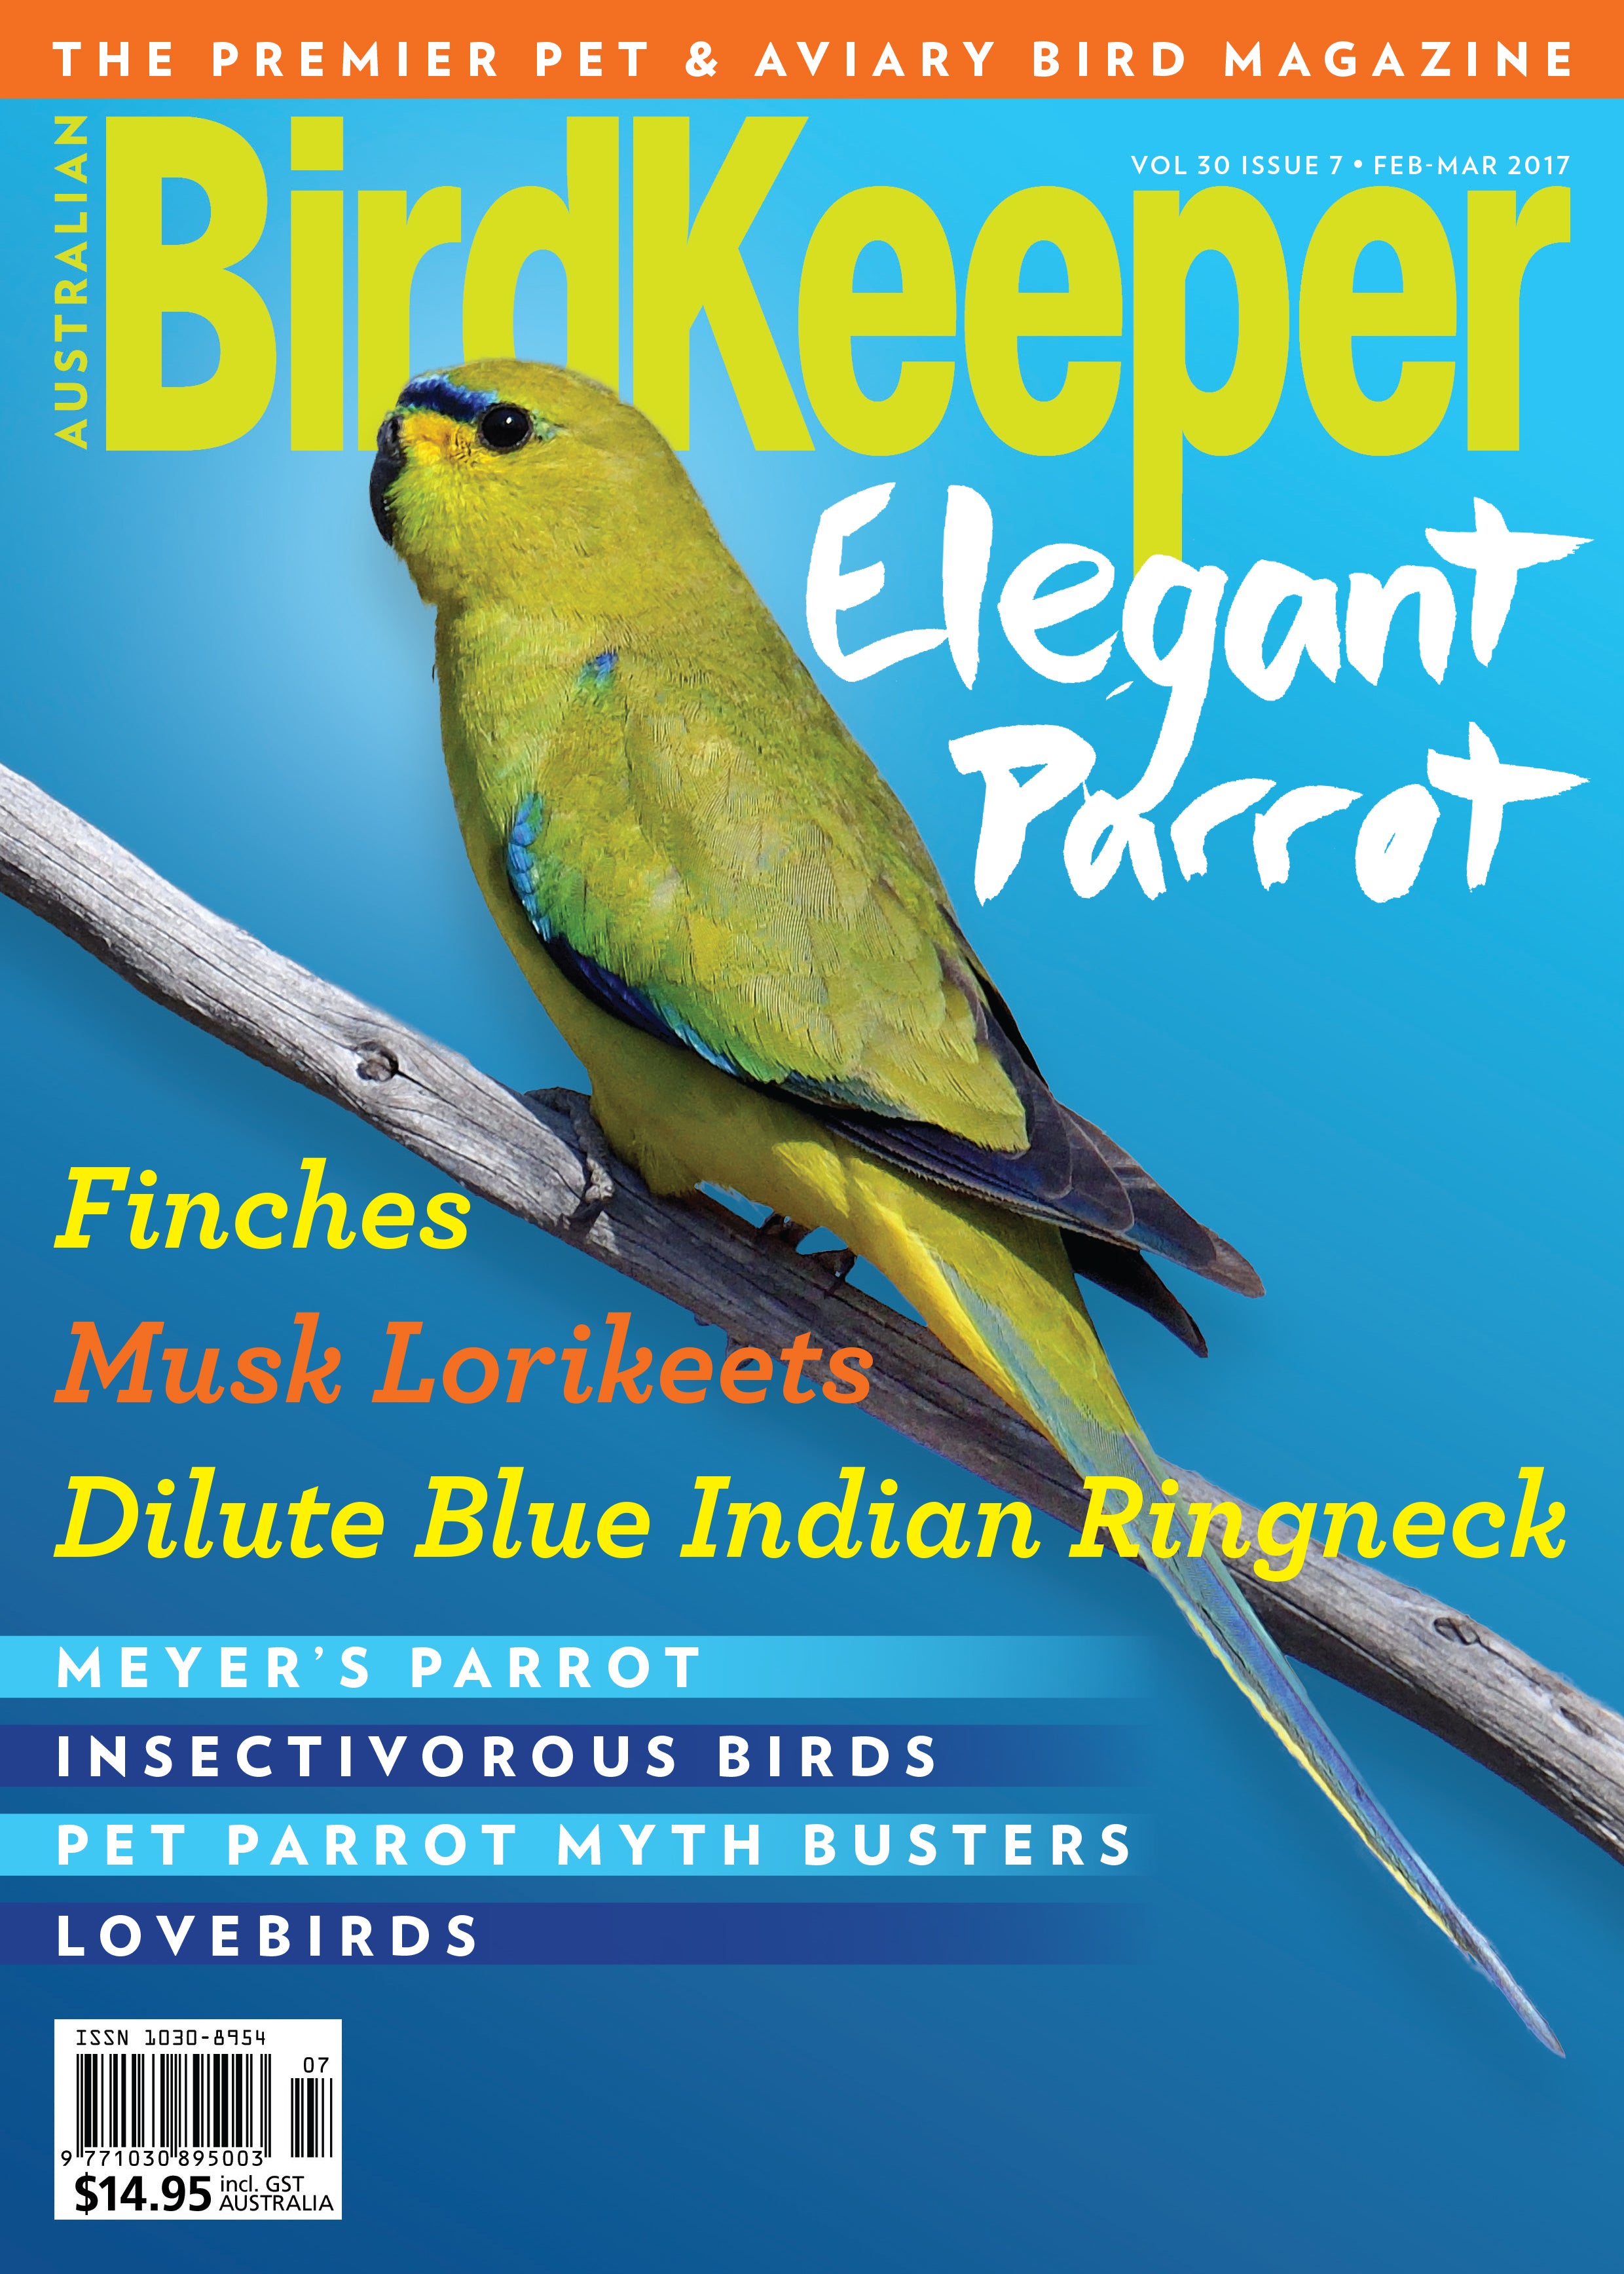 Australian BirdKeeper Magazine Vol 30 Iss 7